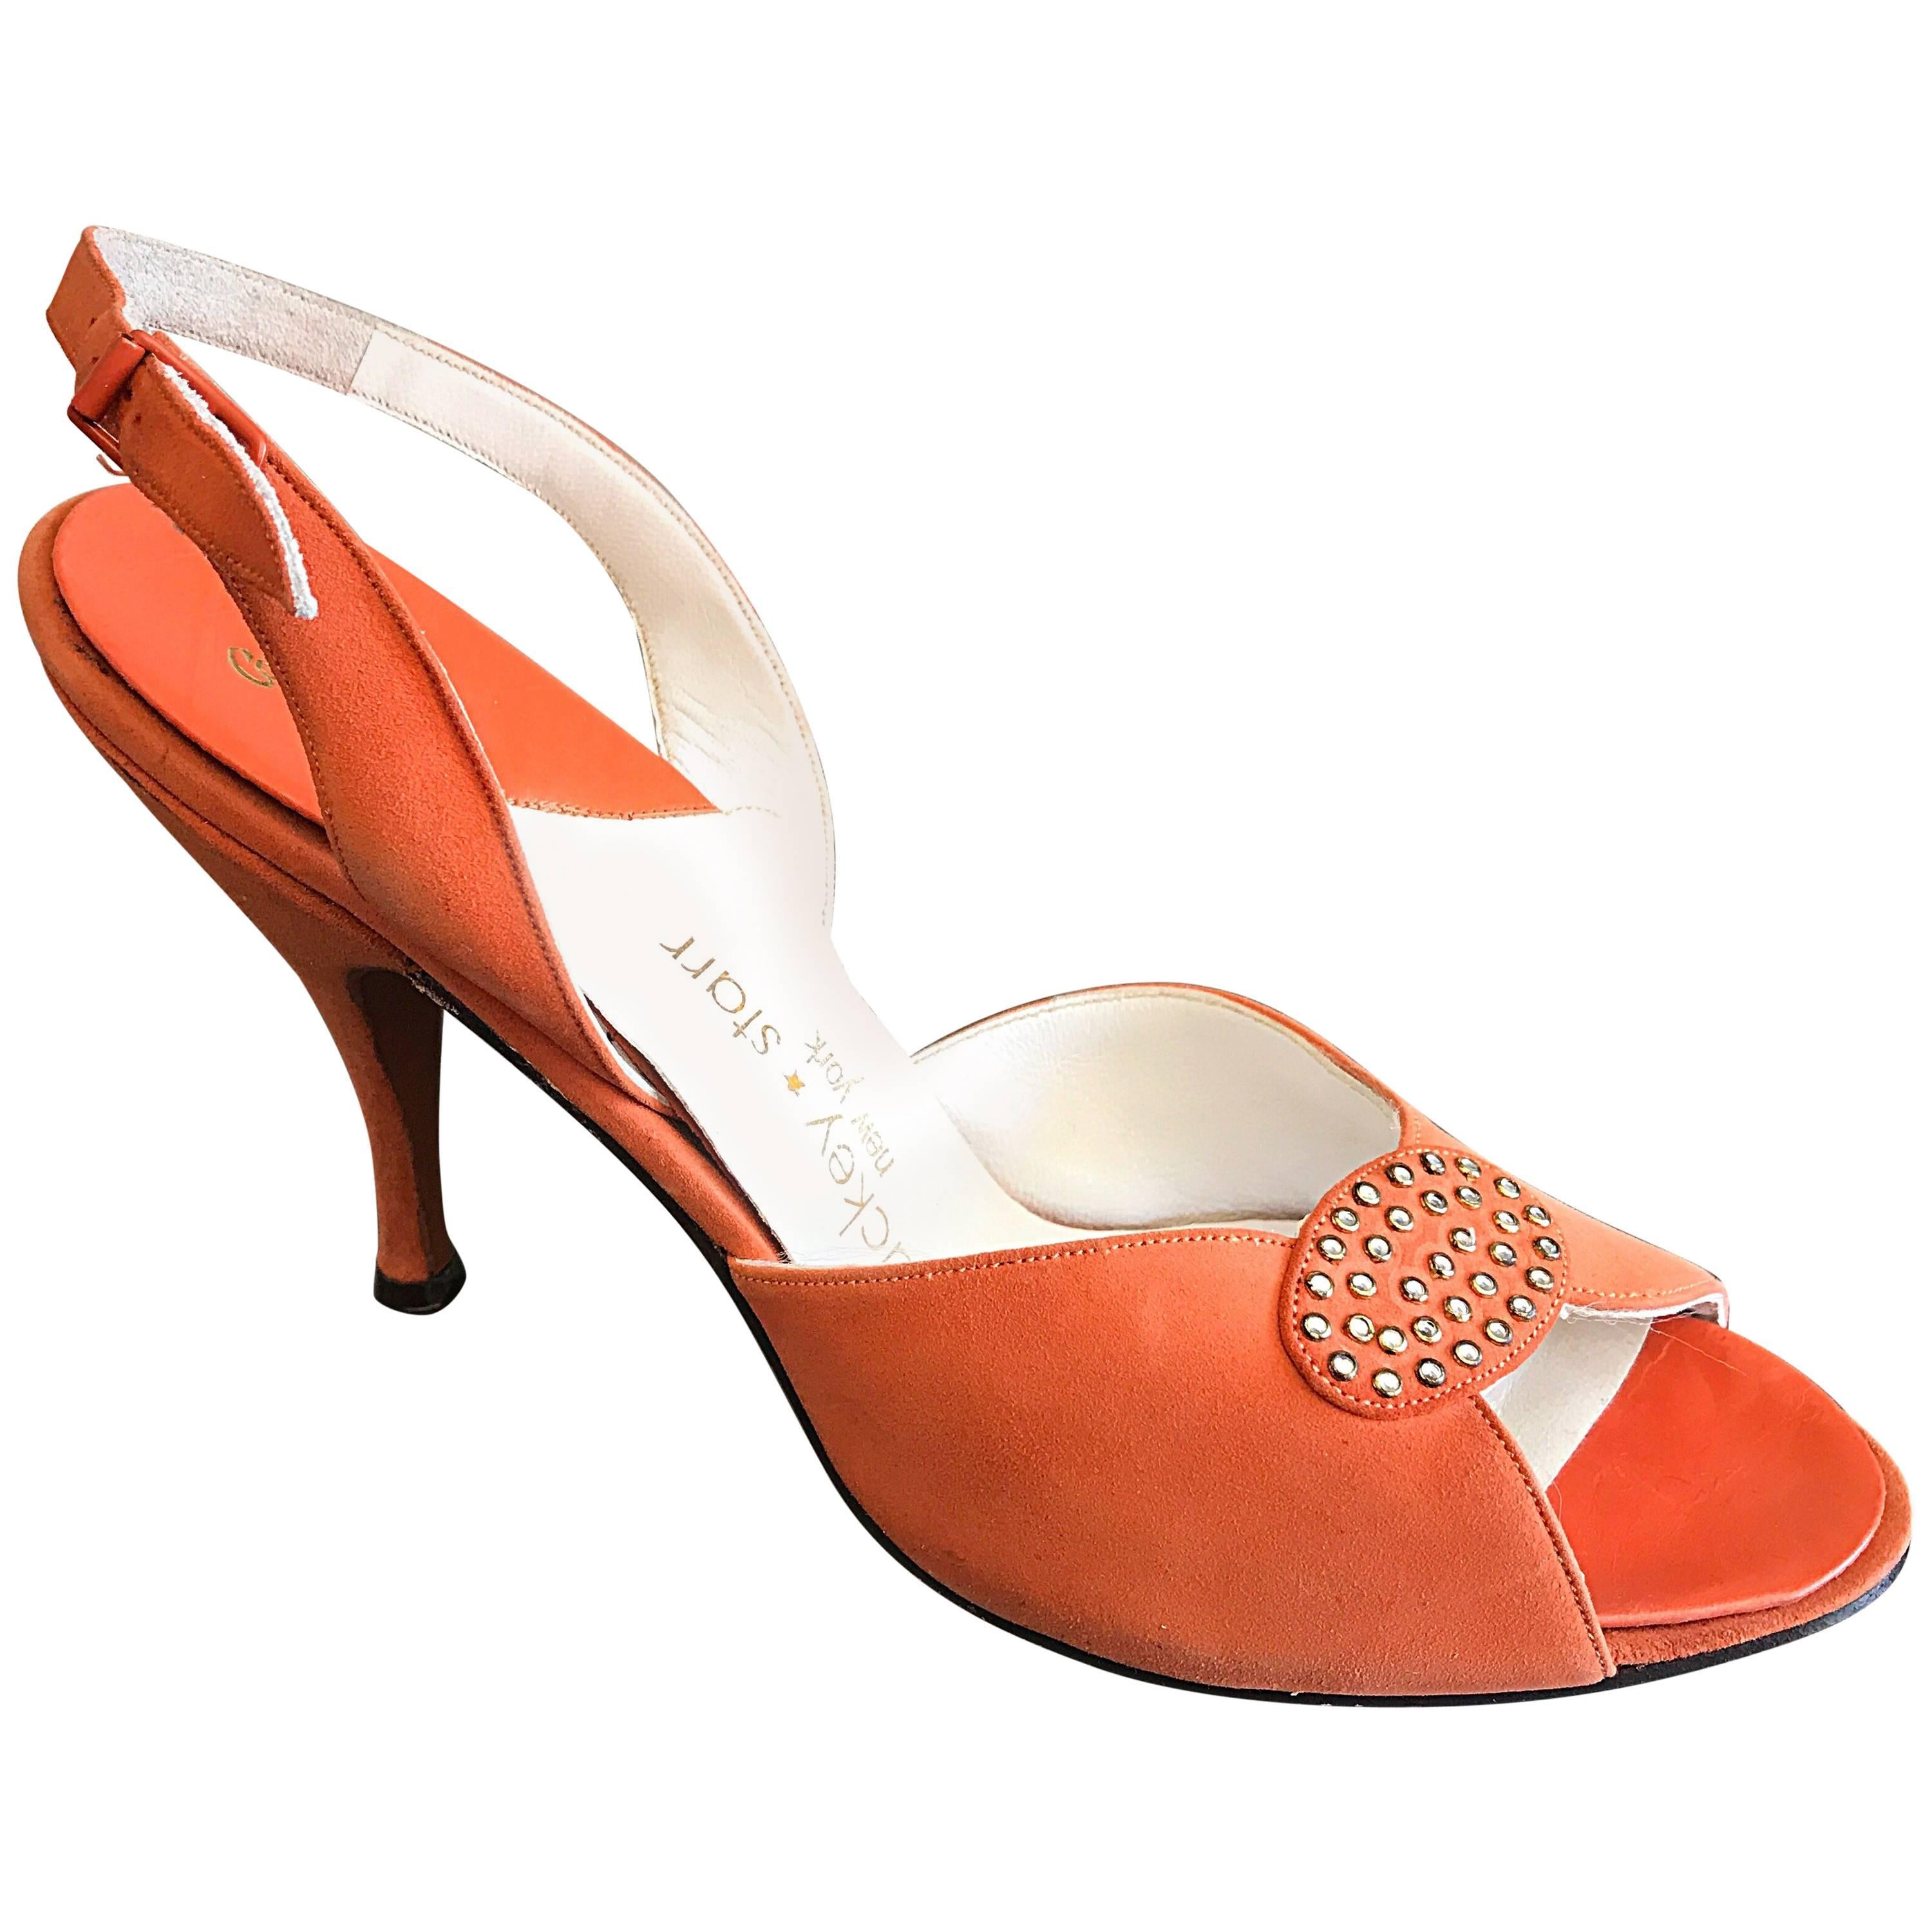 Mackey Starr Chaussures à talons à talons avec strass en cuir orange sorbet, Taille 6N, années 1950, Neuf 